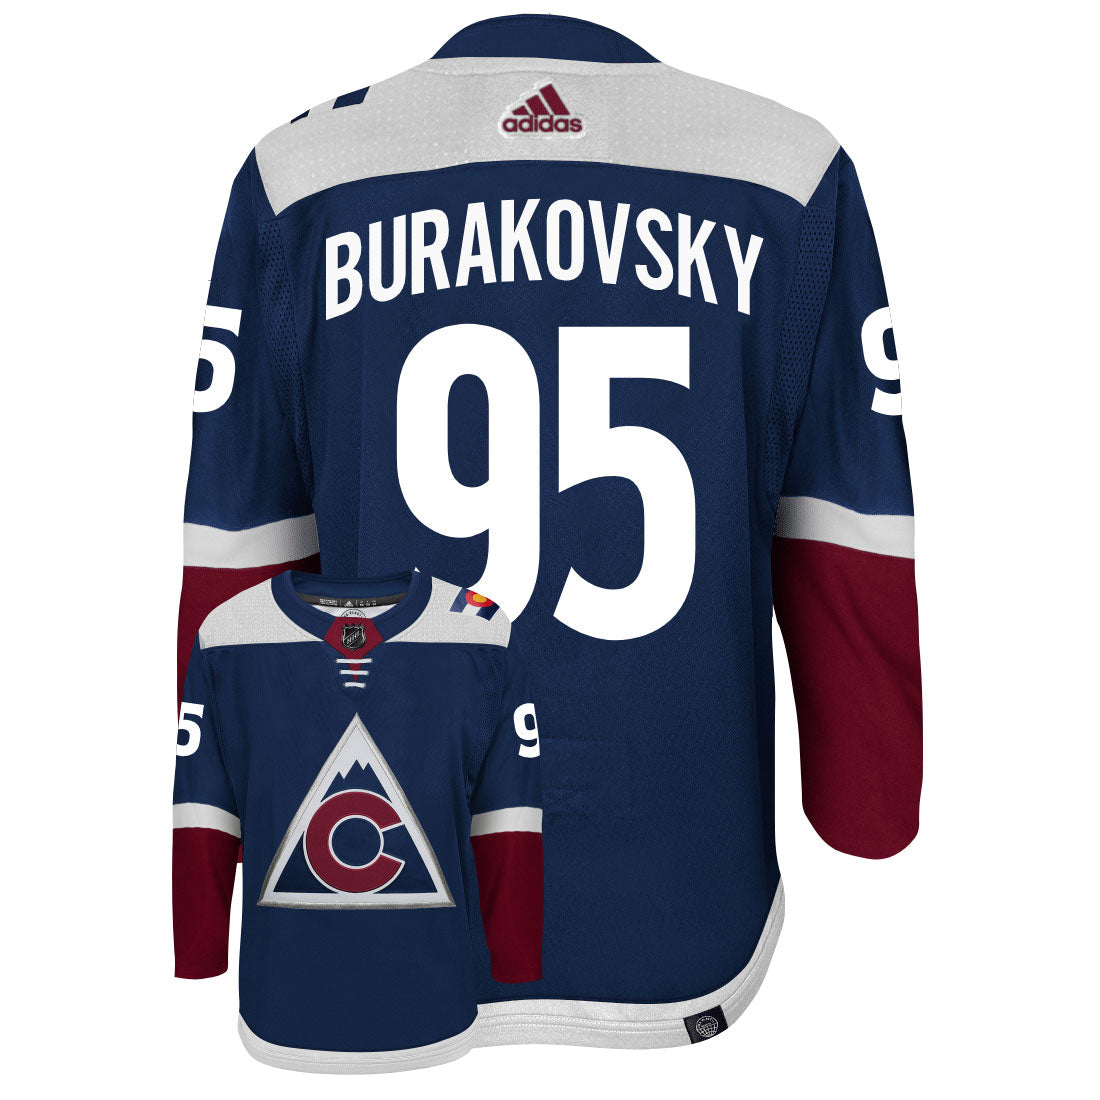 Andre Burakovsky Colorado Avalanche Adidas Primegreen Authentic Third Alternate NHL Hockey Jersey - Back/Front View